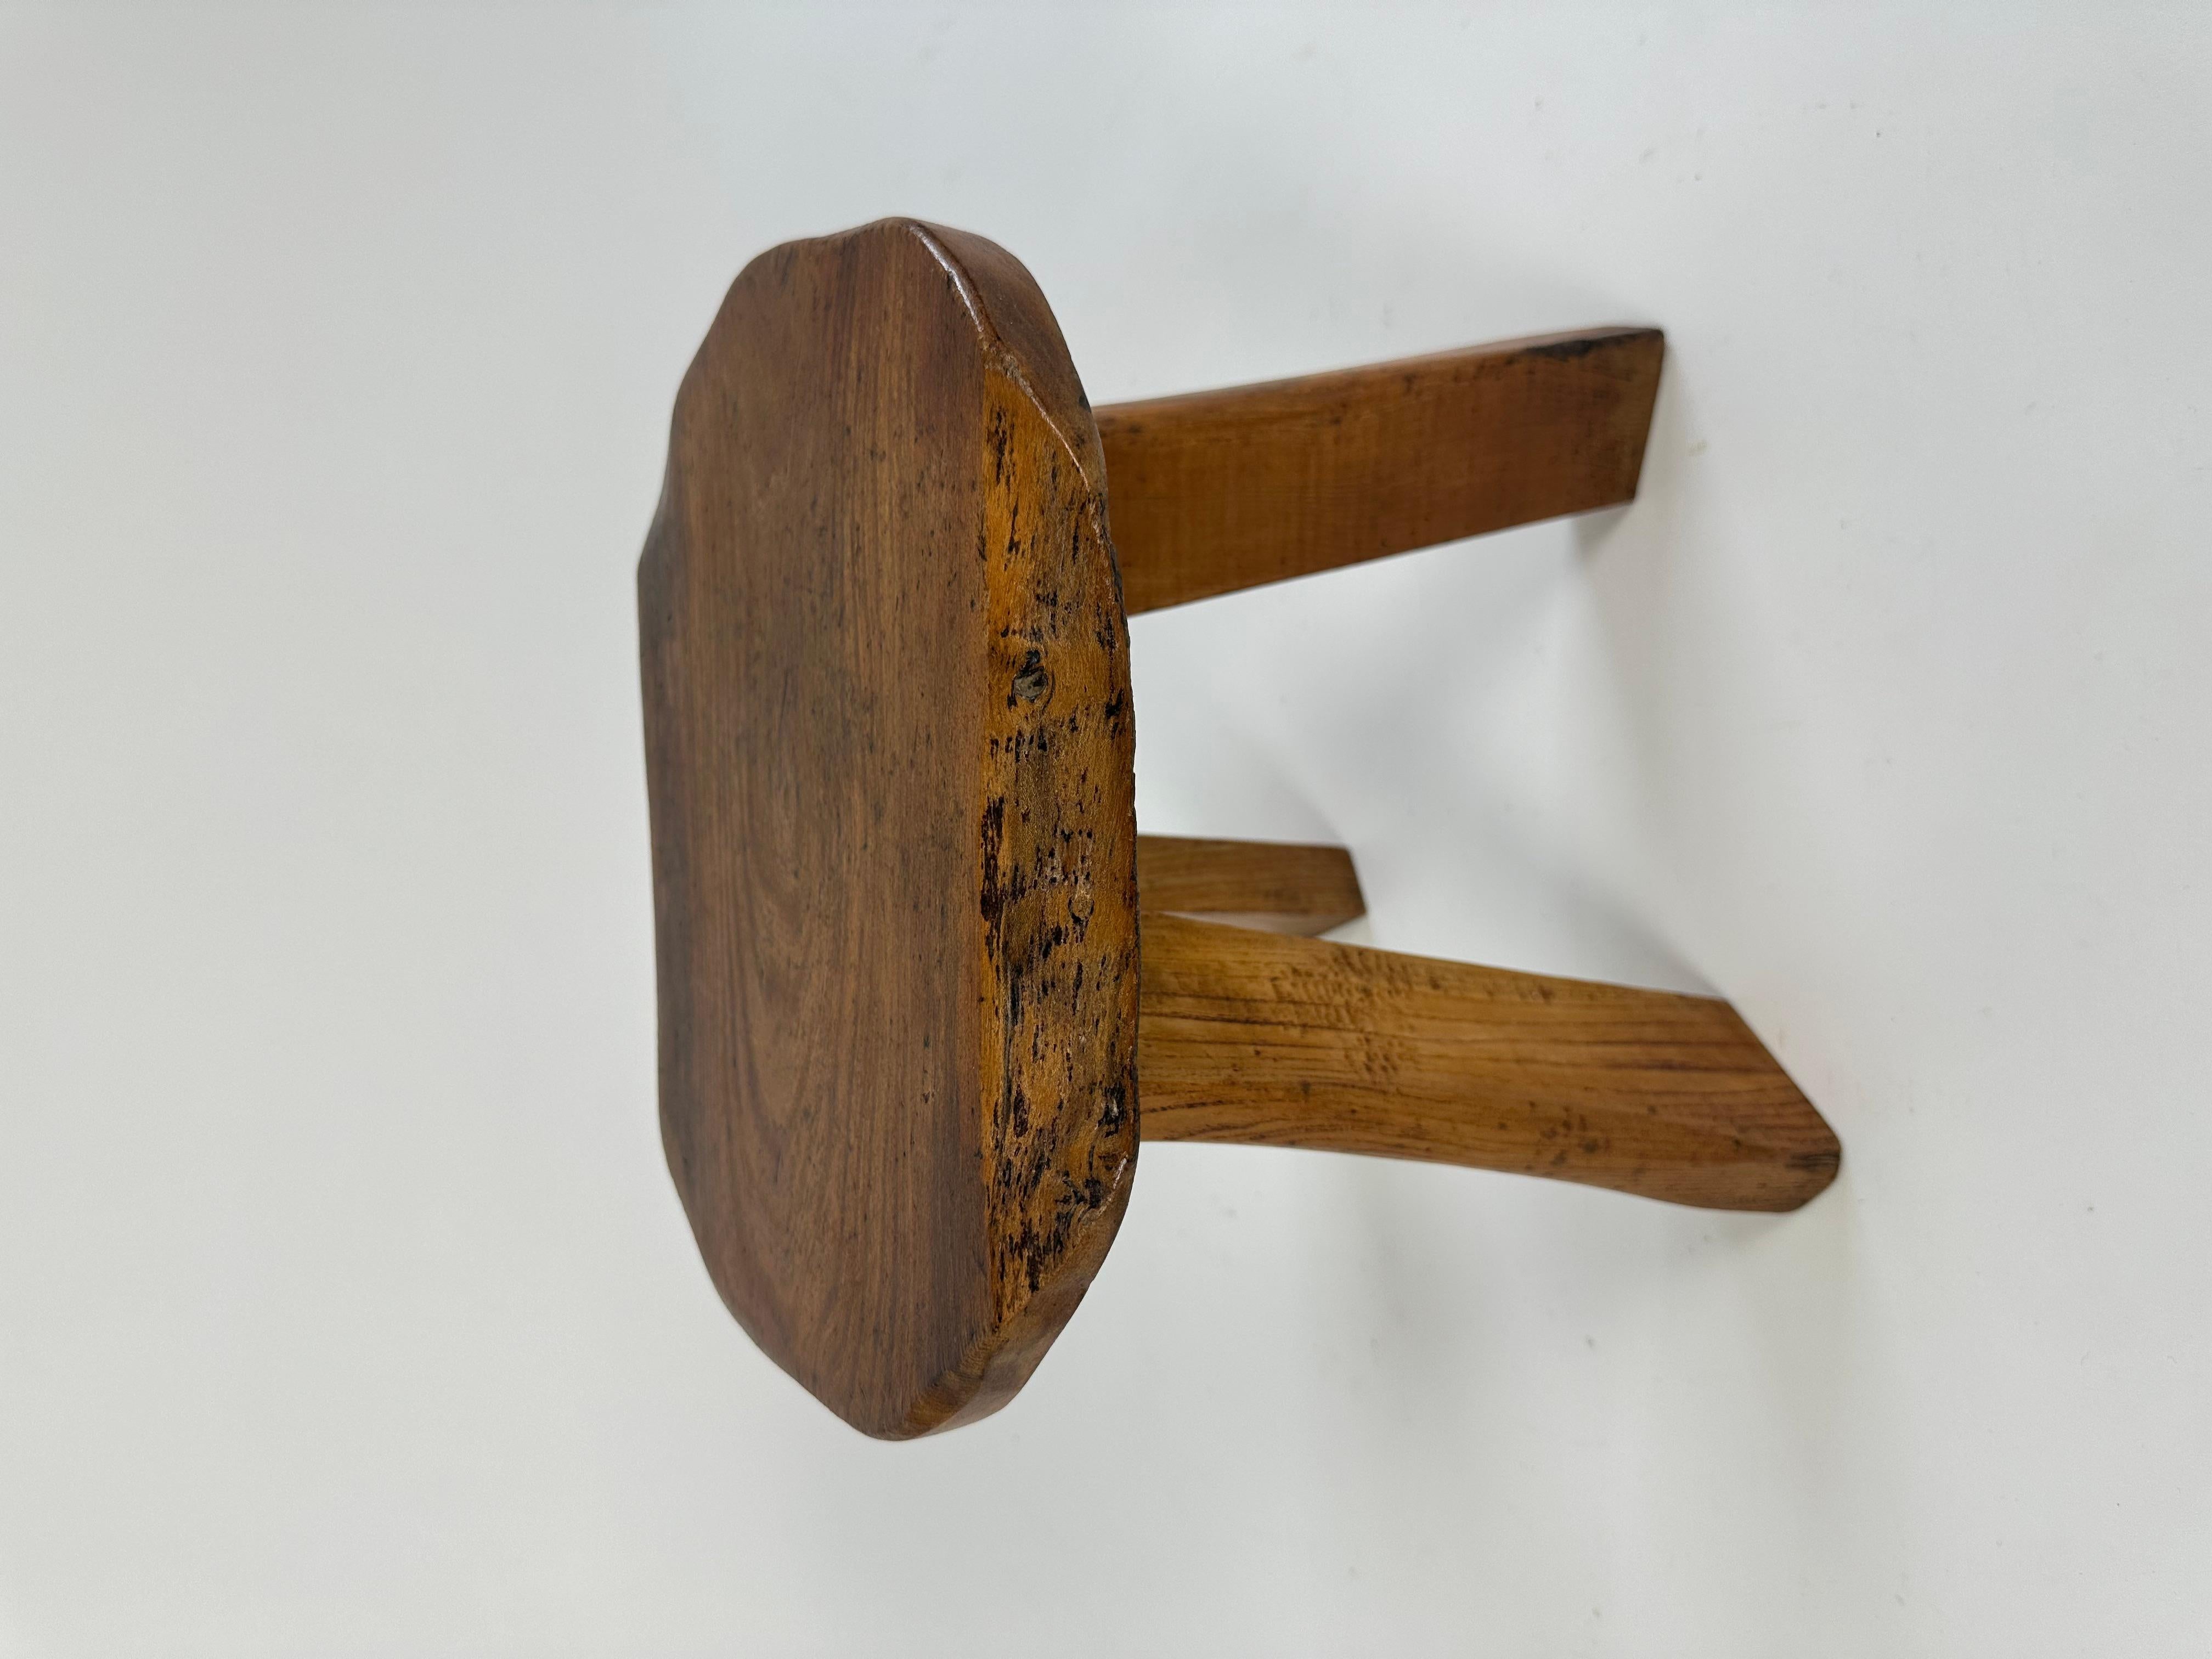 Vintage rustic stool by Wanderwood, England c.1950-60 For Sale 2